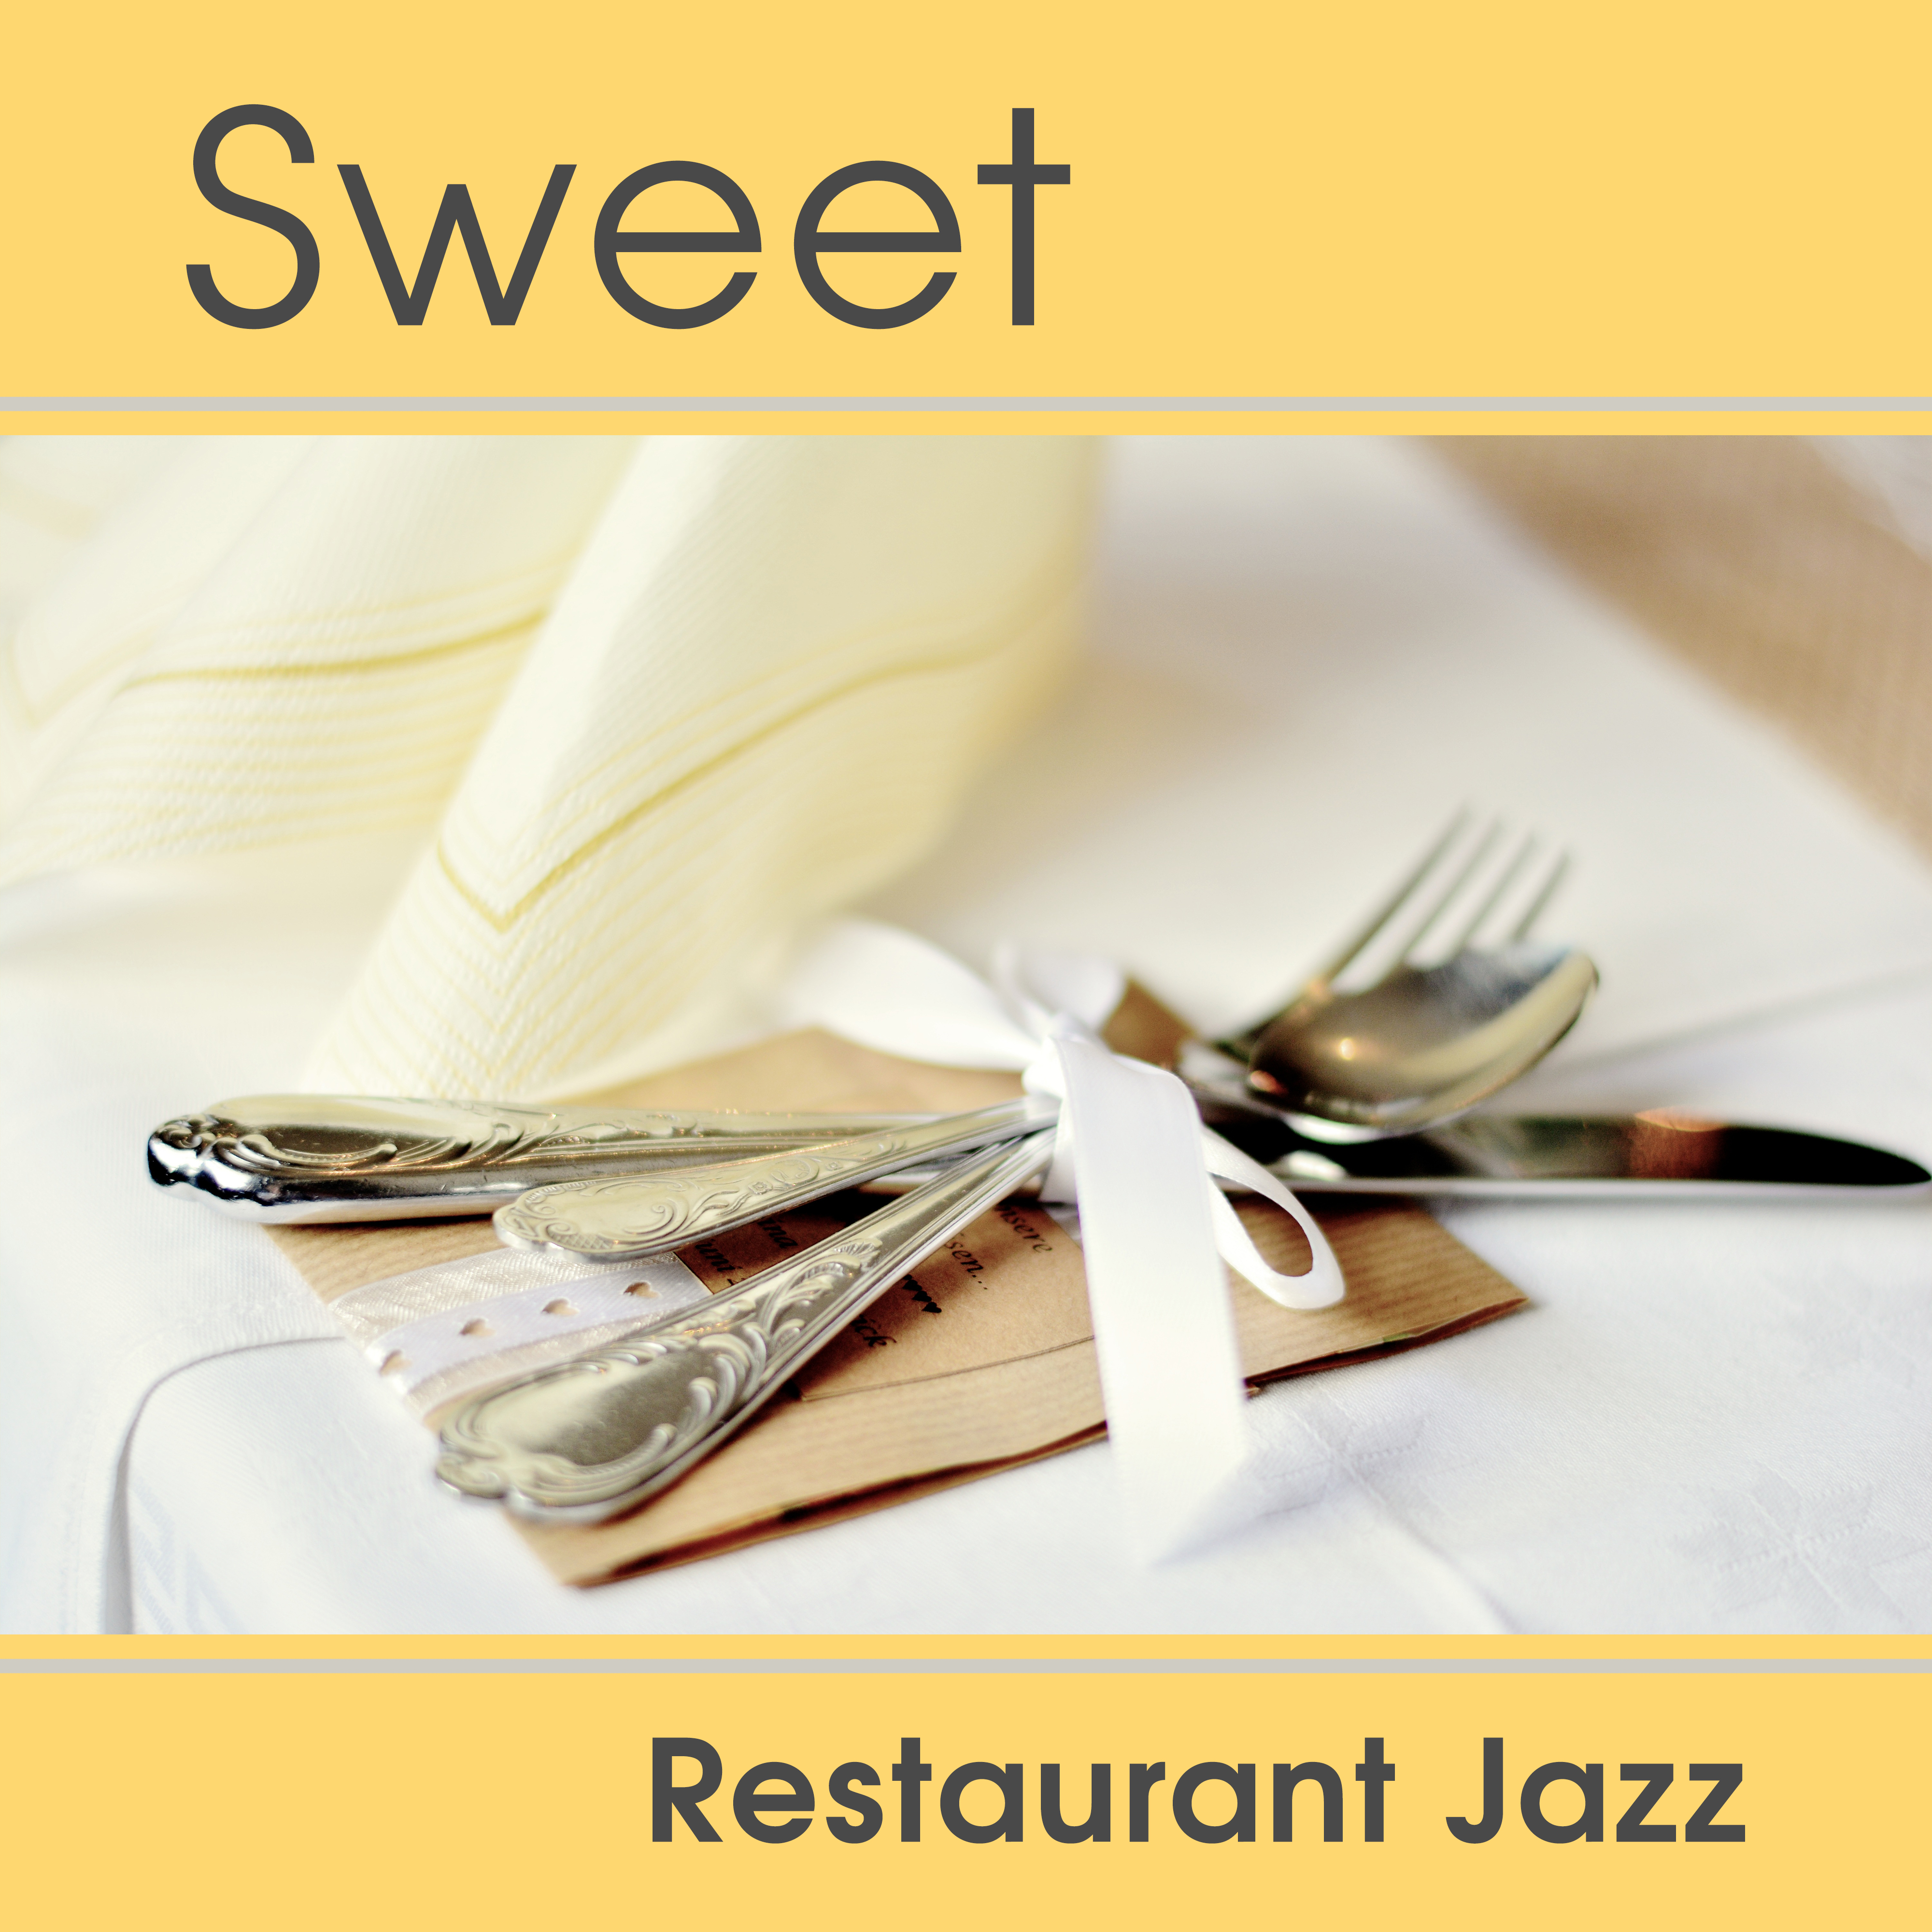 Sweet Restaurant Jazz – Calming Jazz Music, Best Background Sounds for Restaurant, Relaxing Melodies